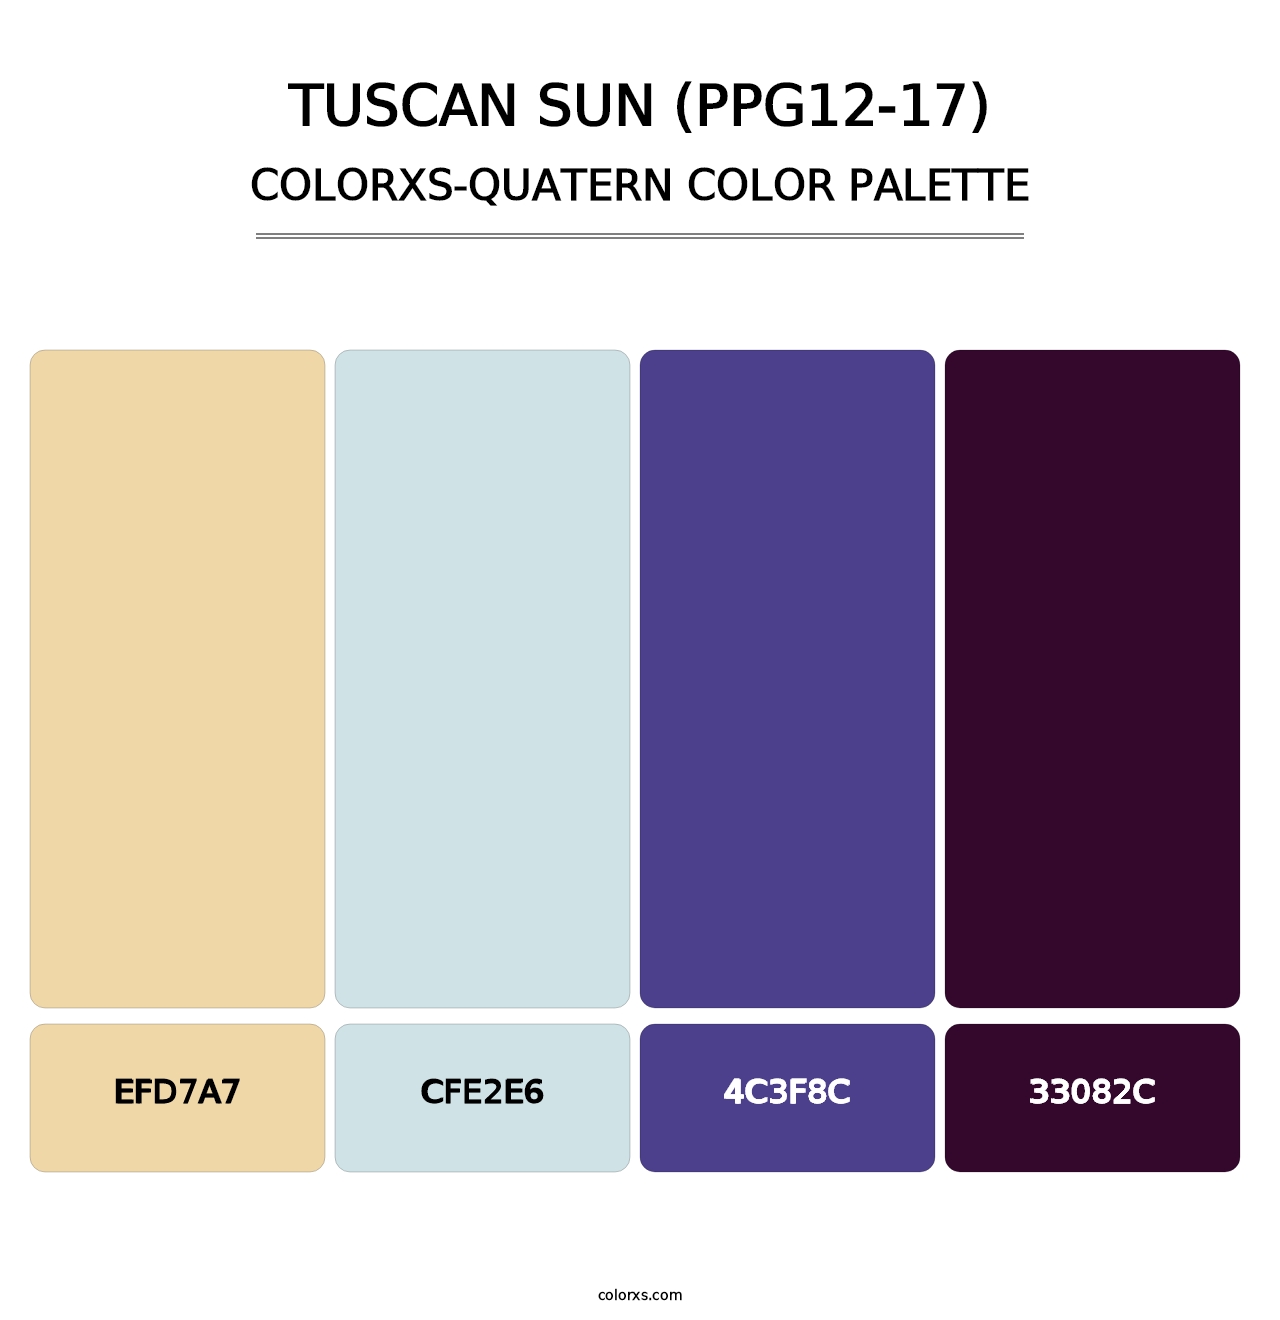 Tuscan Sun (PPG12-17) - Colorxs Quatern Palette